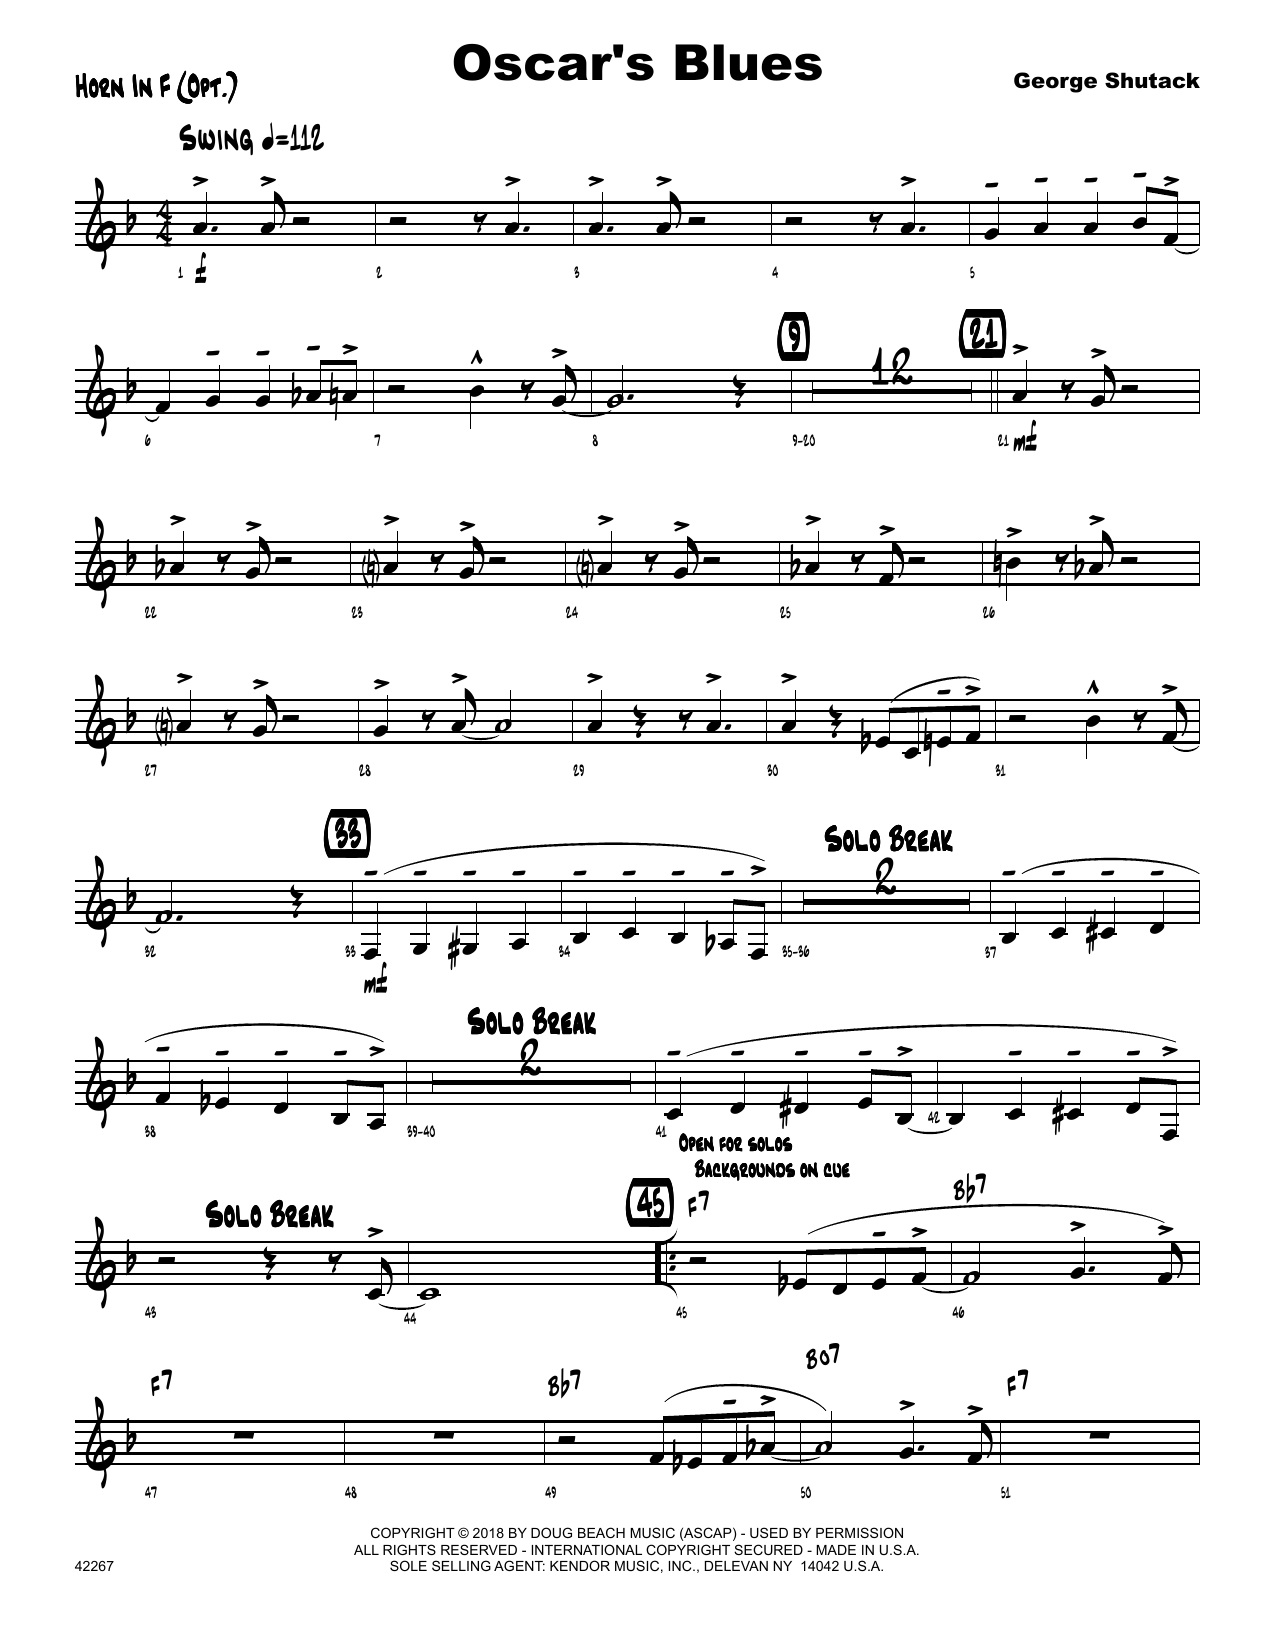 Download George Shutack Oscar's Blues - Horn in F Sheet Music